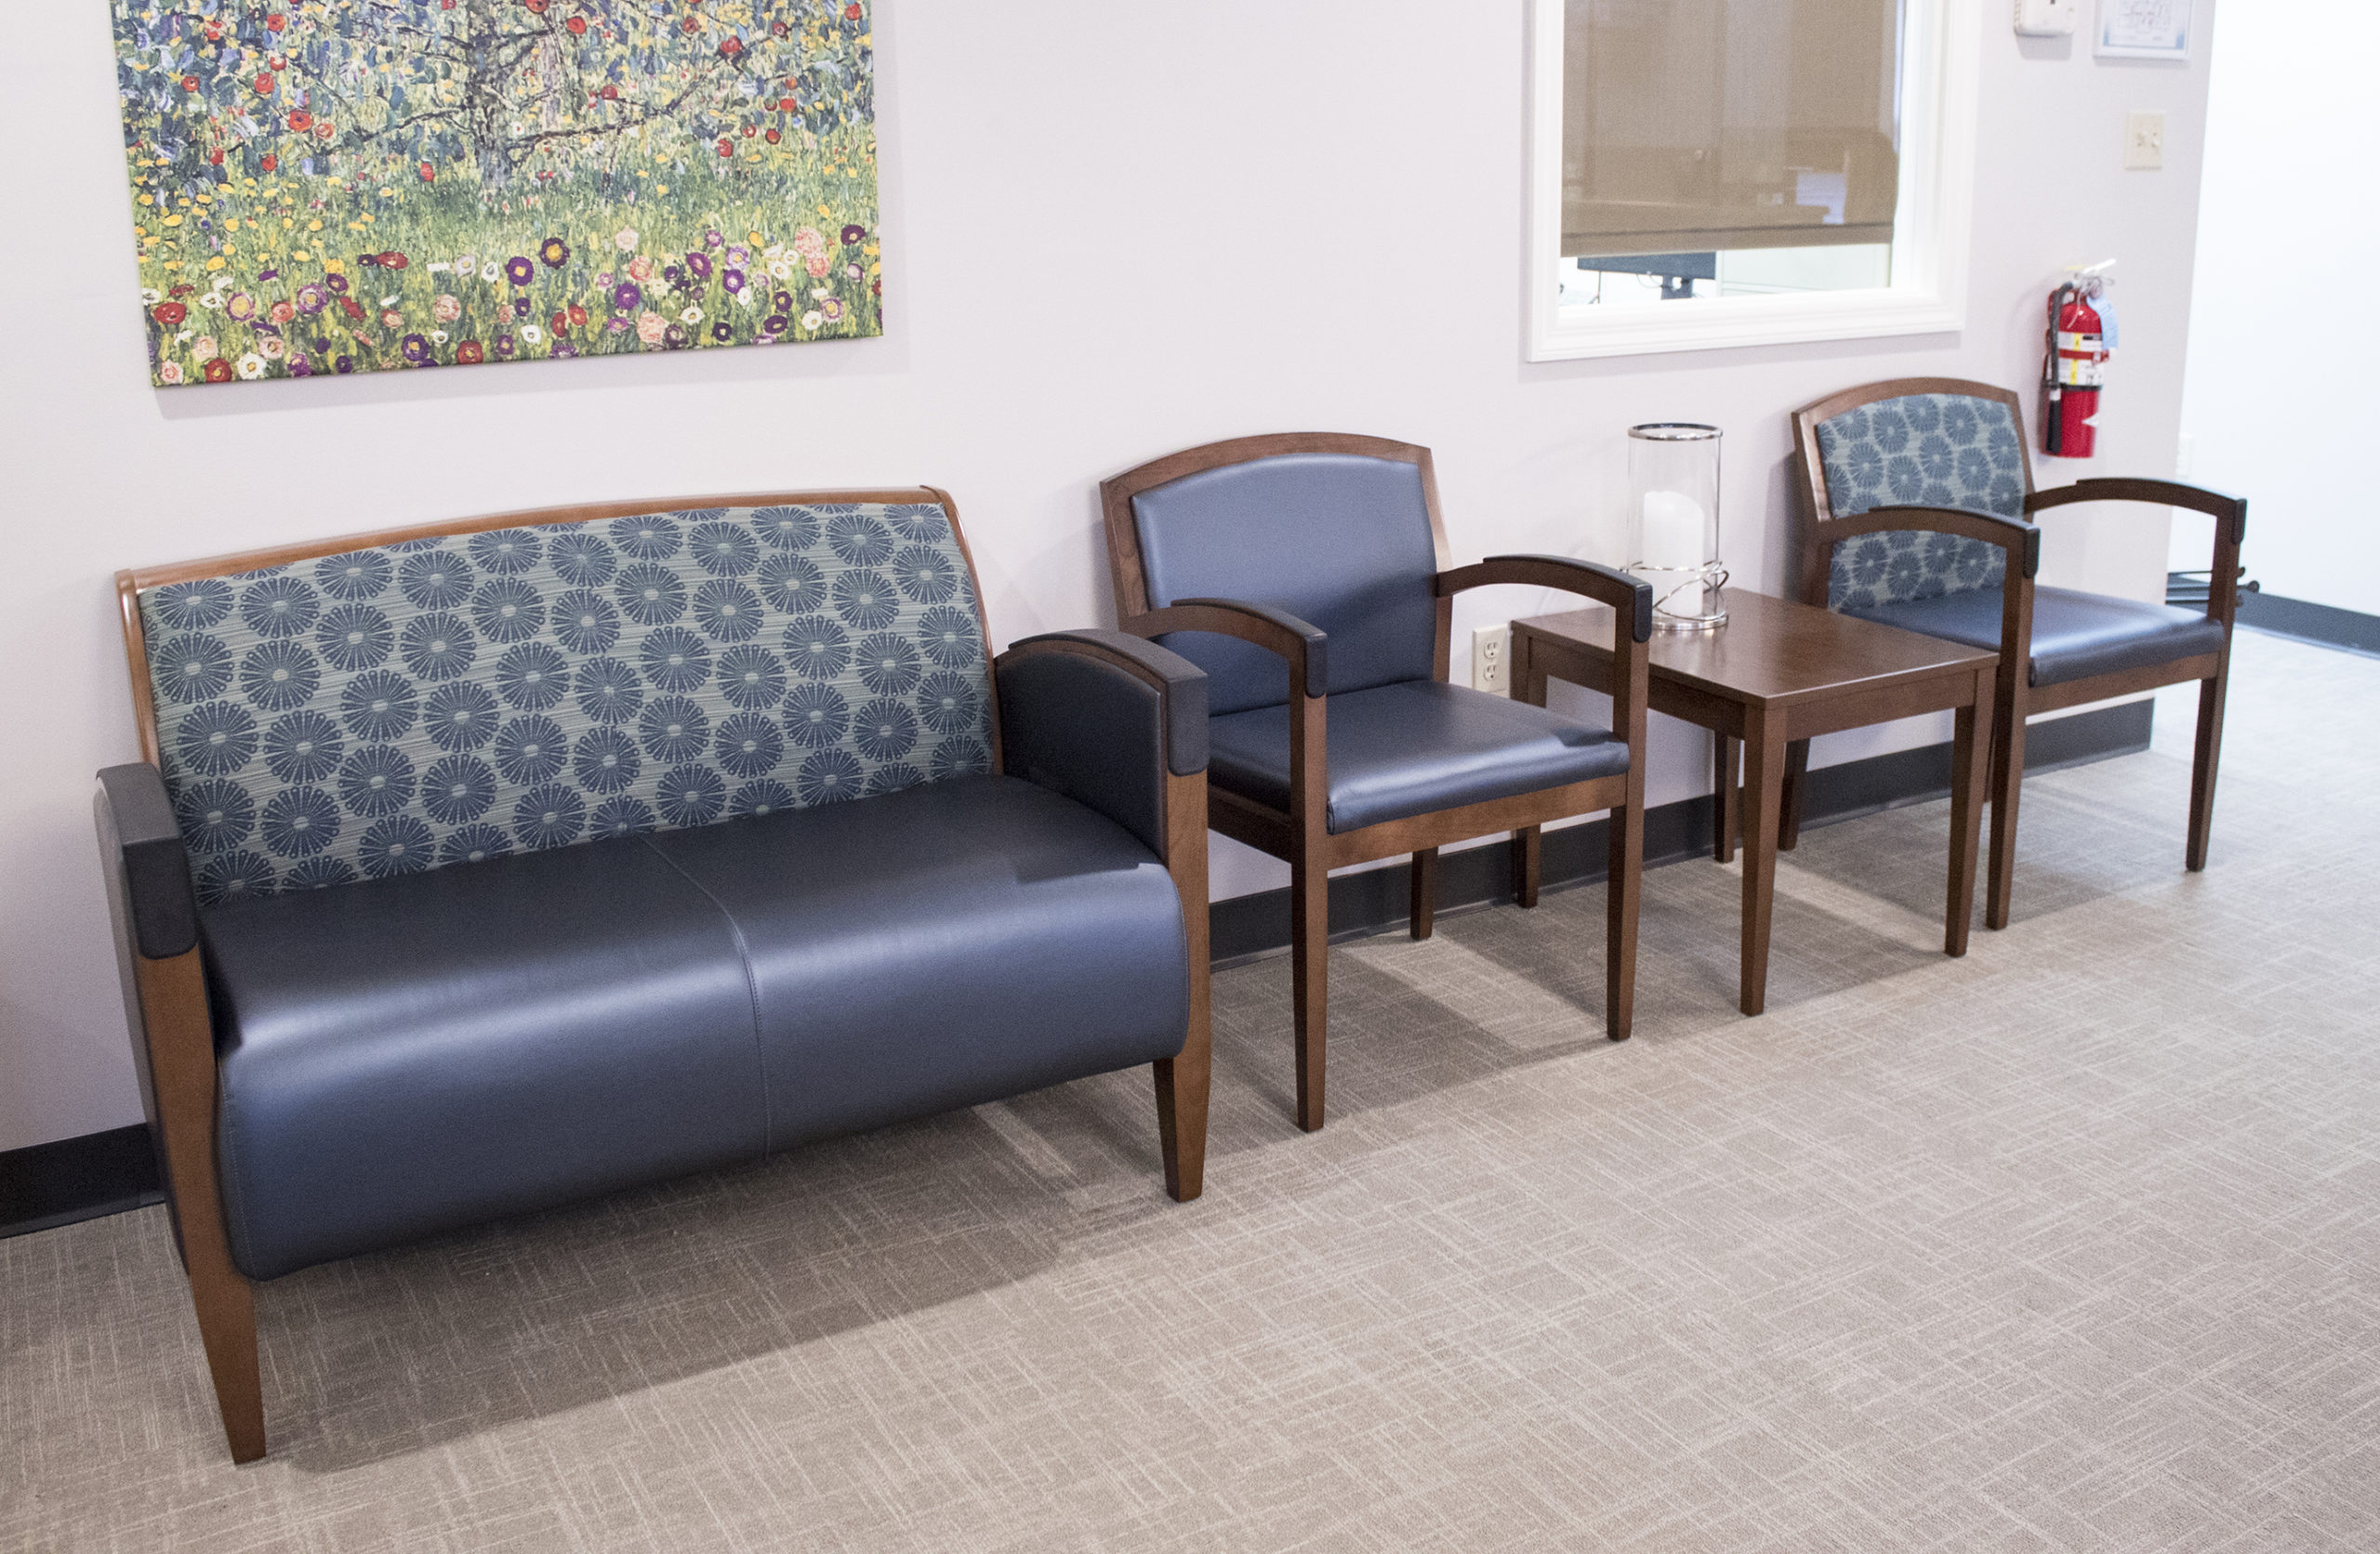 Three Seats in Waiting Room